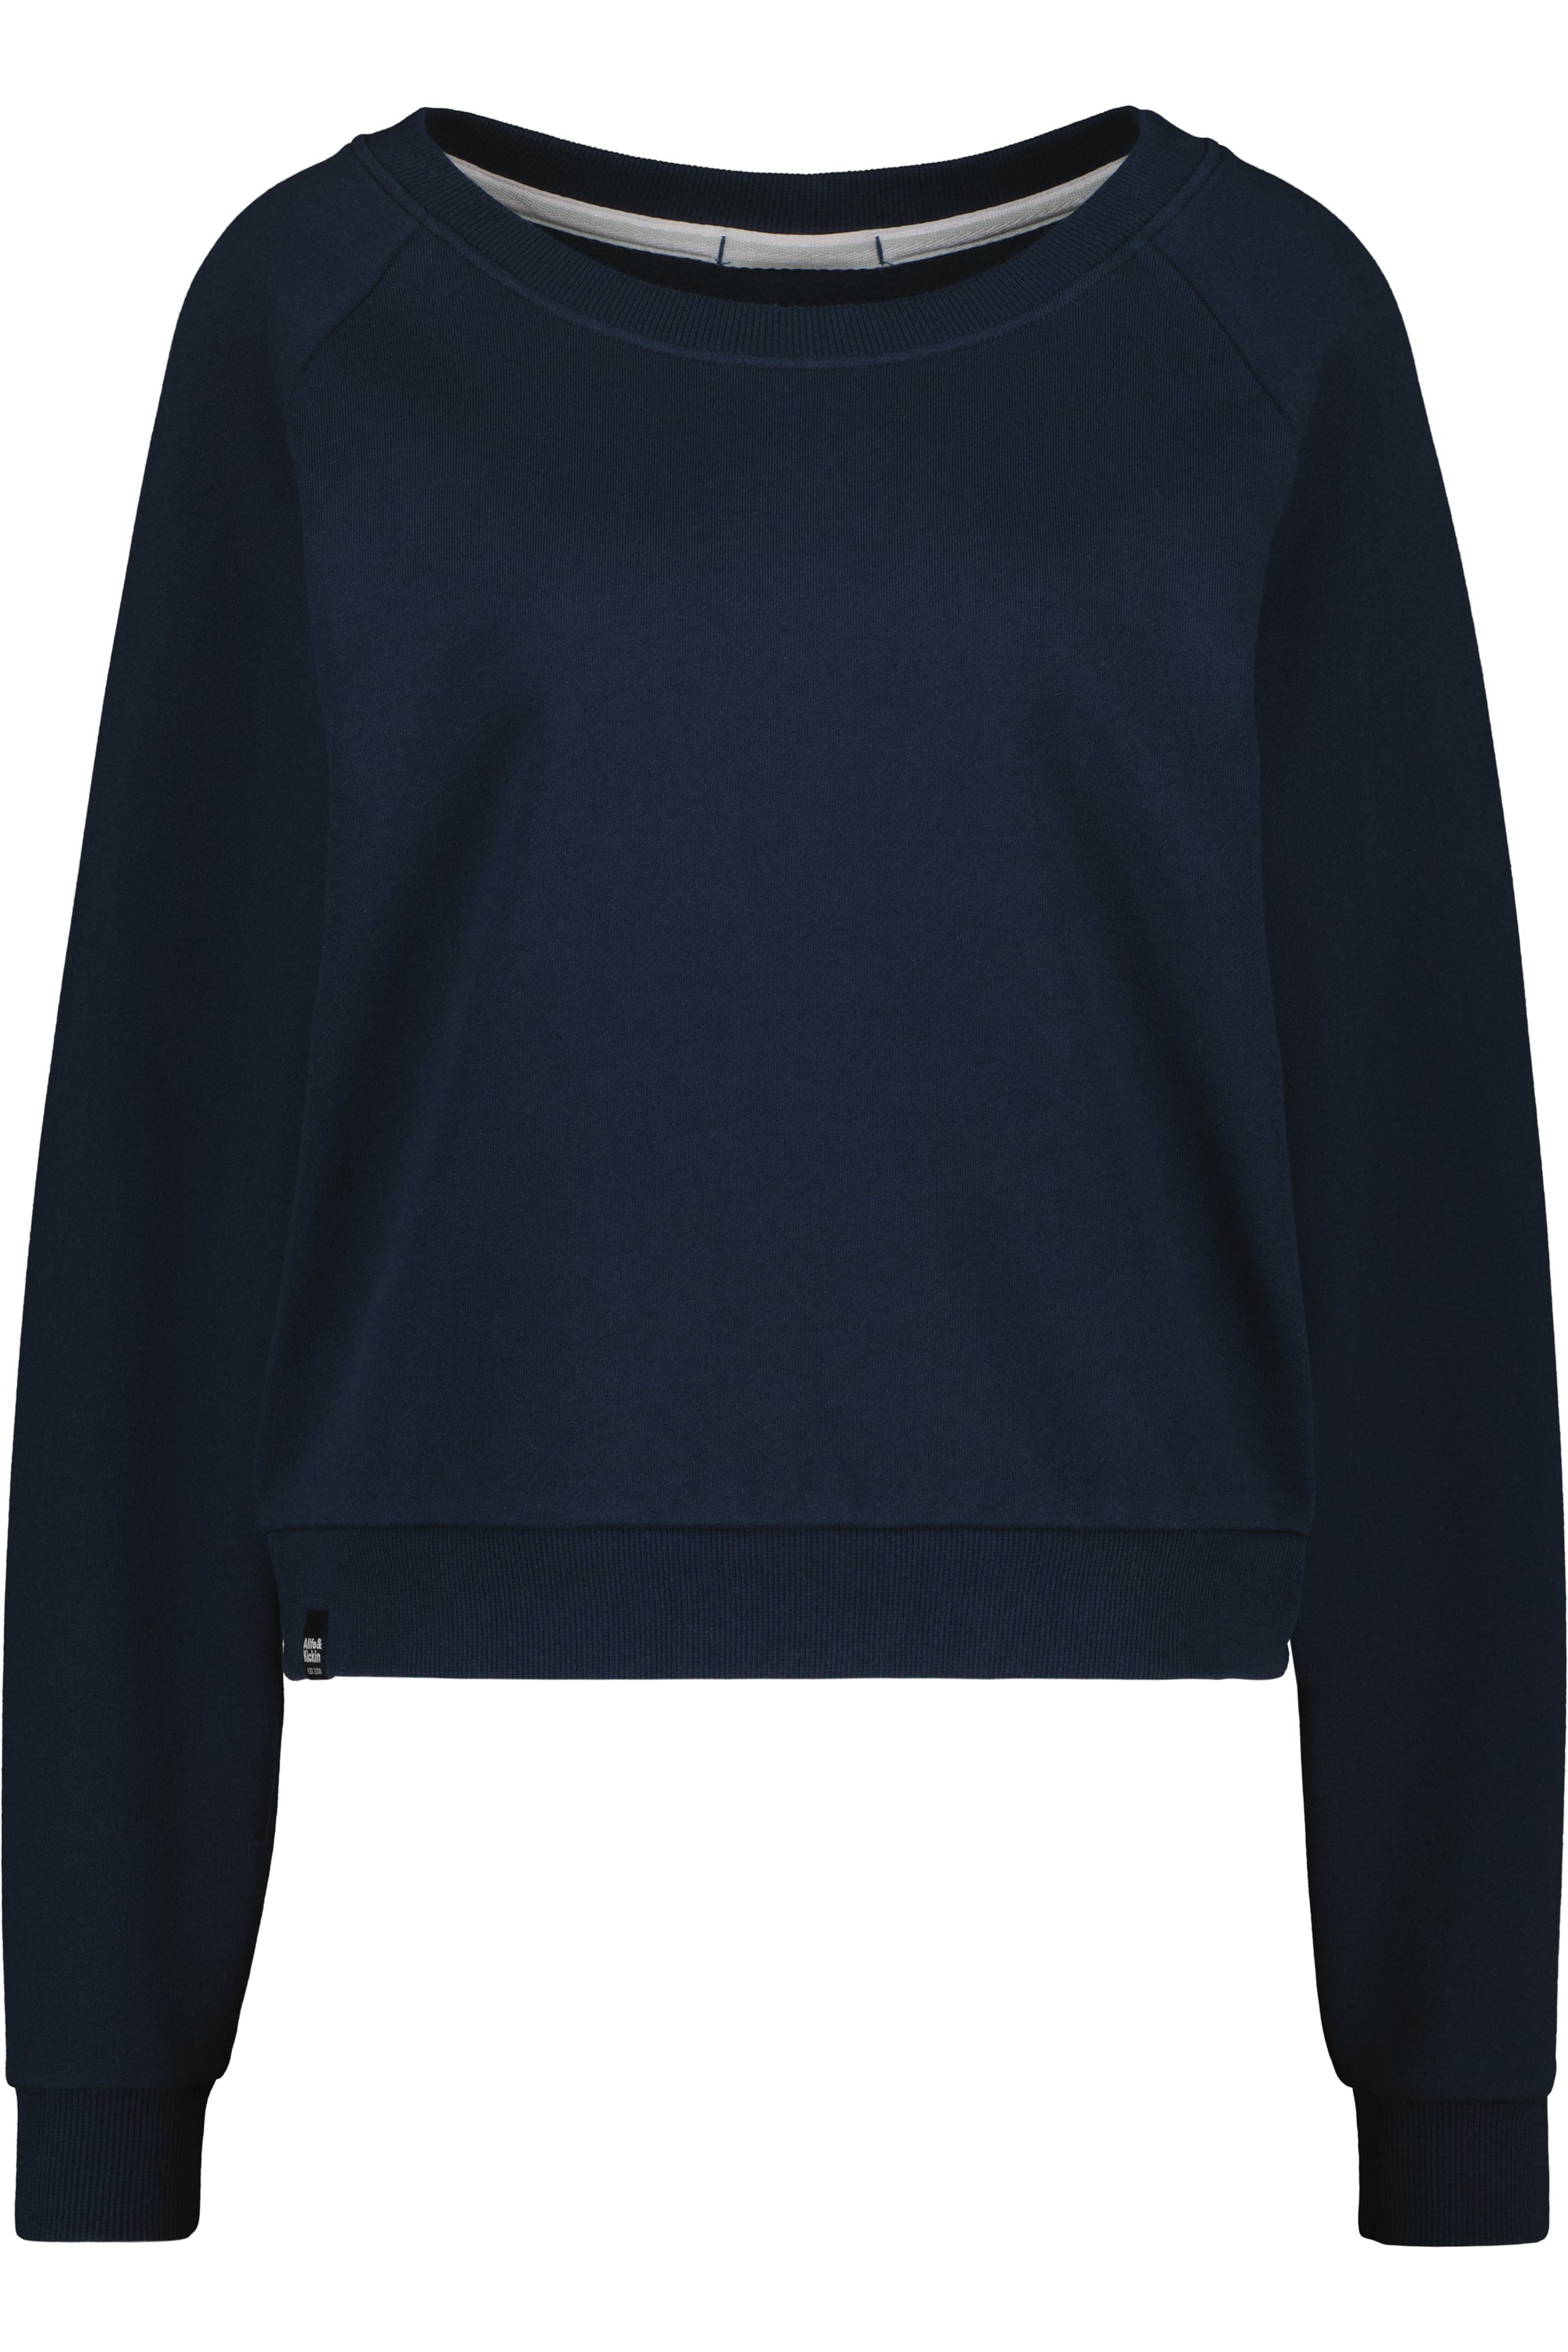 TeonaAK A Oversize Sweatshirt  Dunkelblau